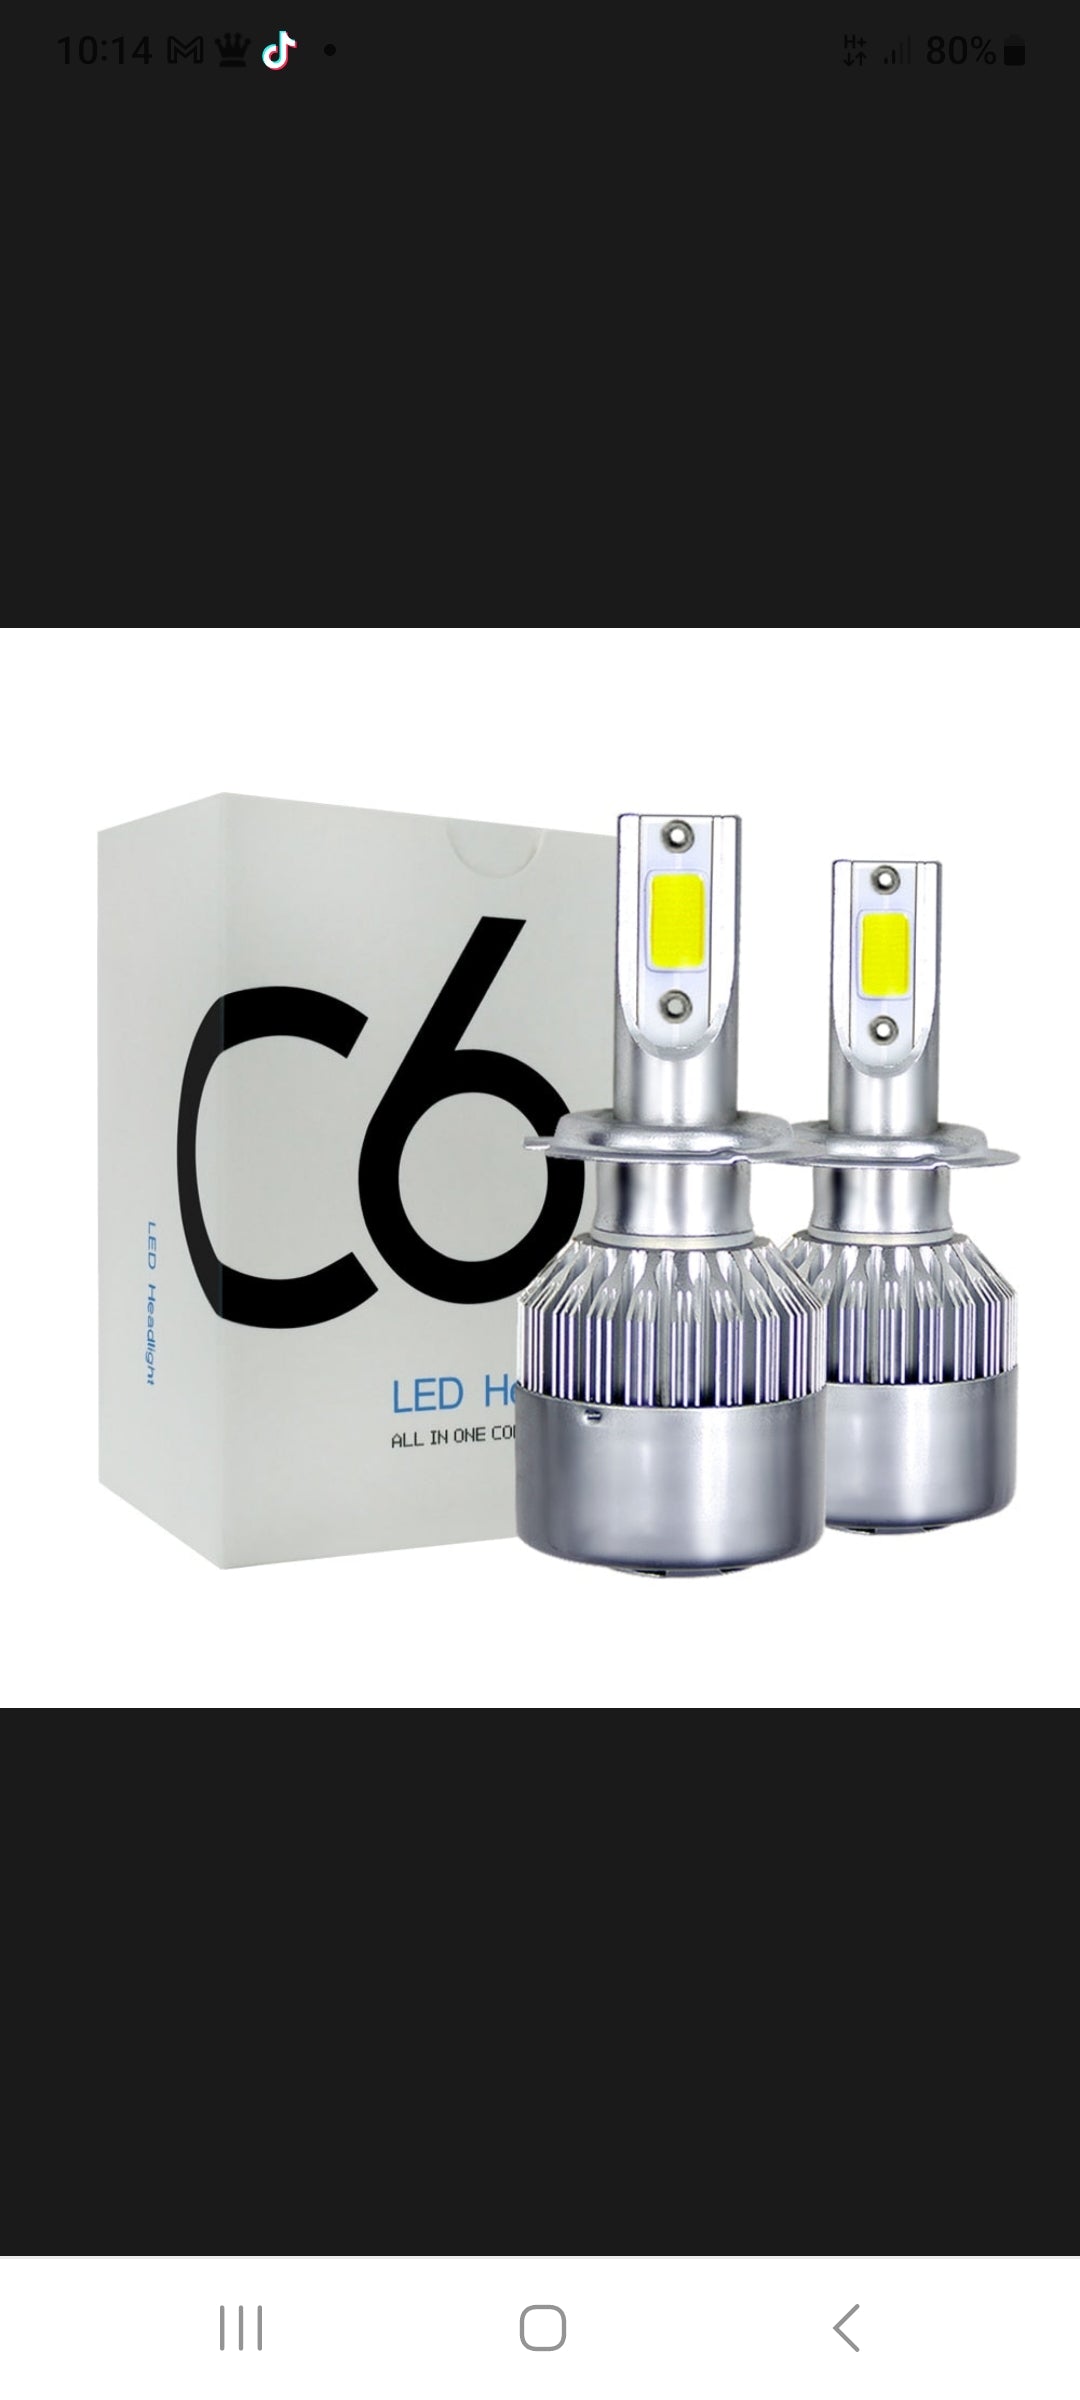 C6 leds